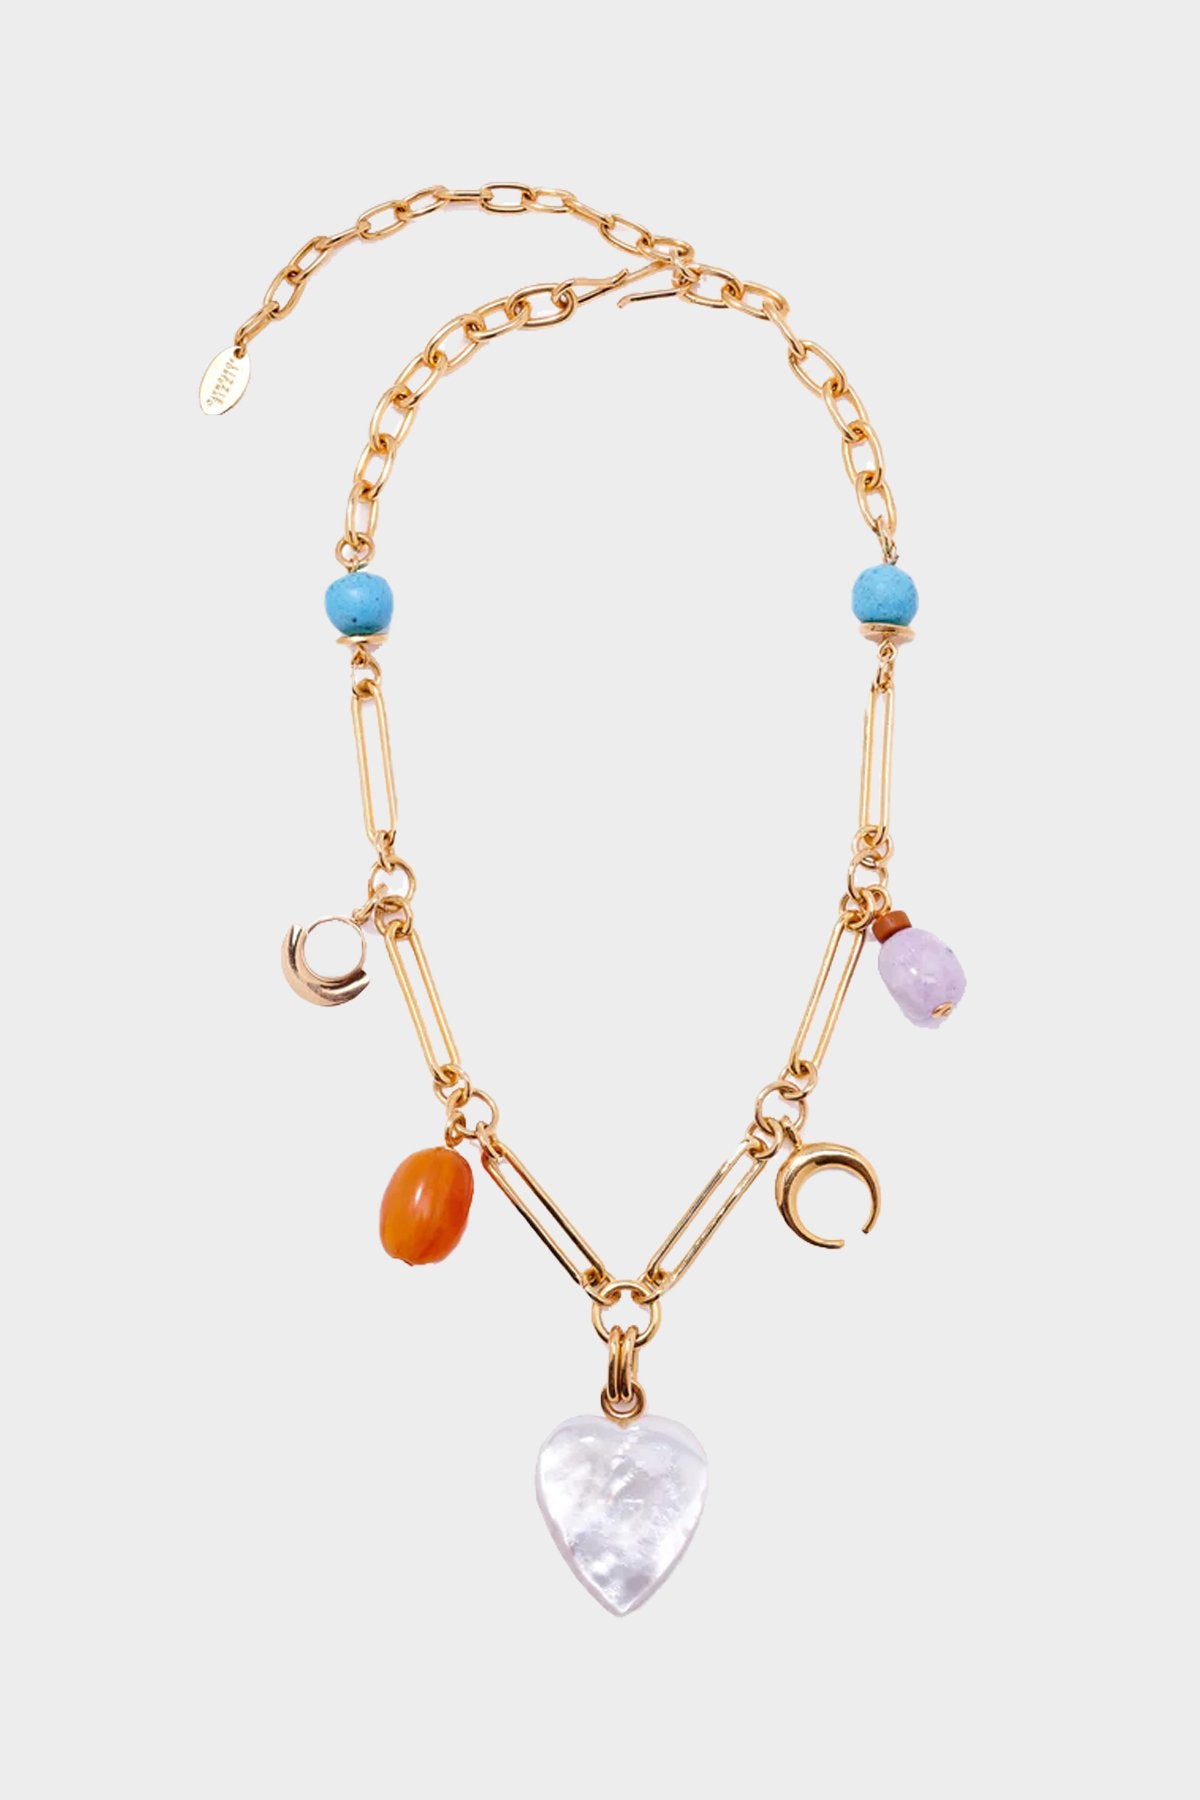 Moonlight Charm Necklace - shop-olivia.com